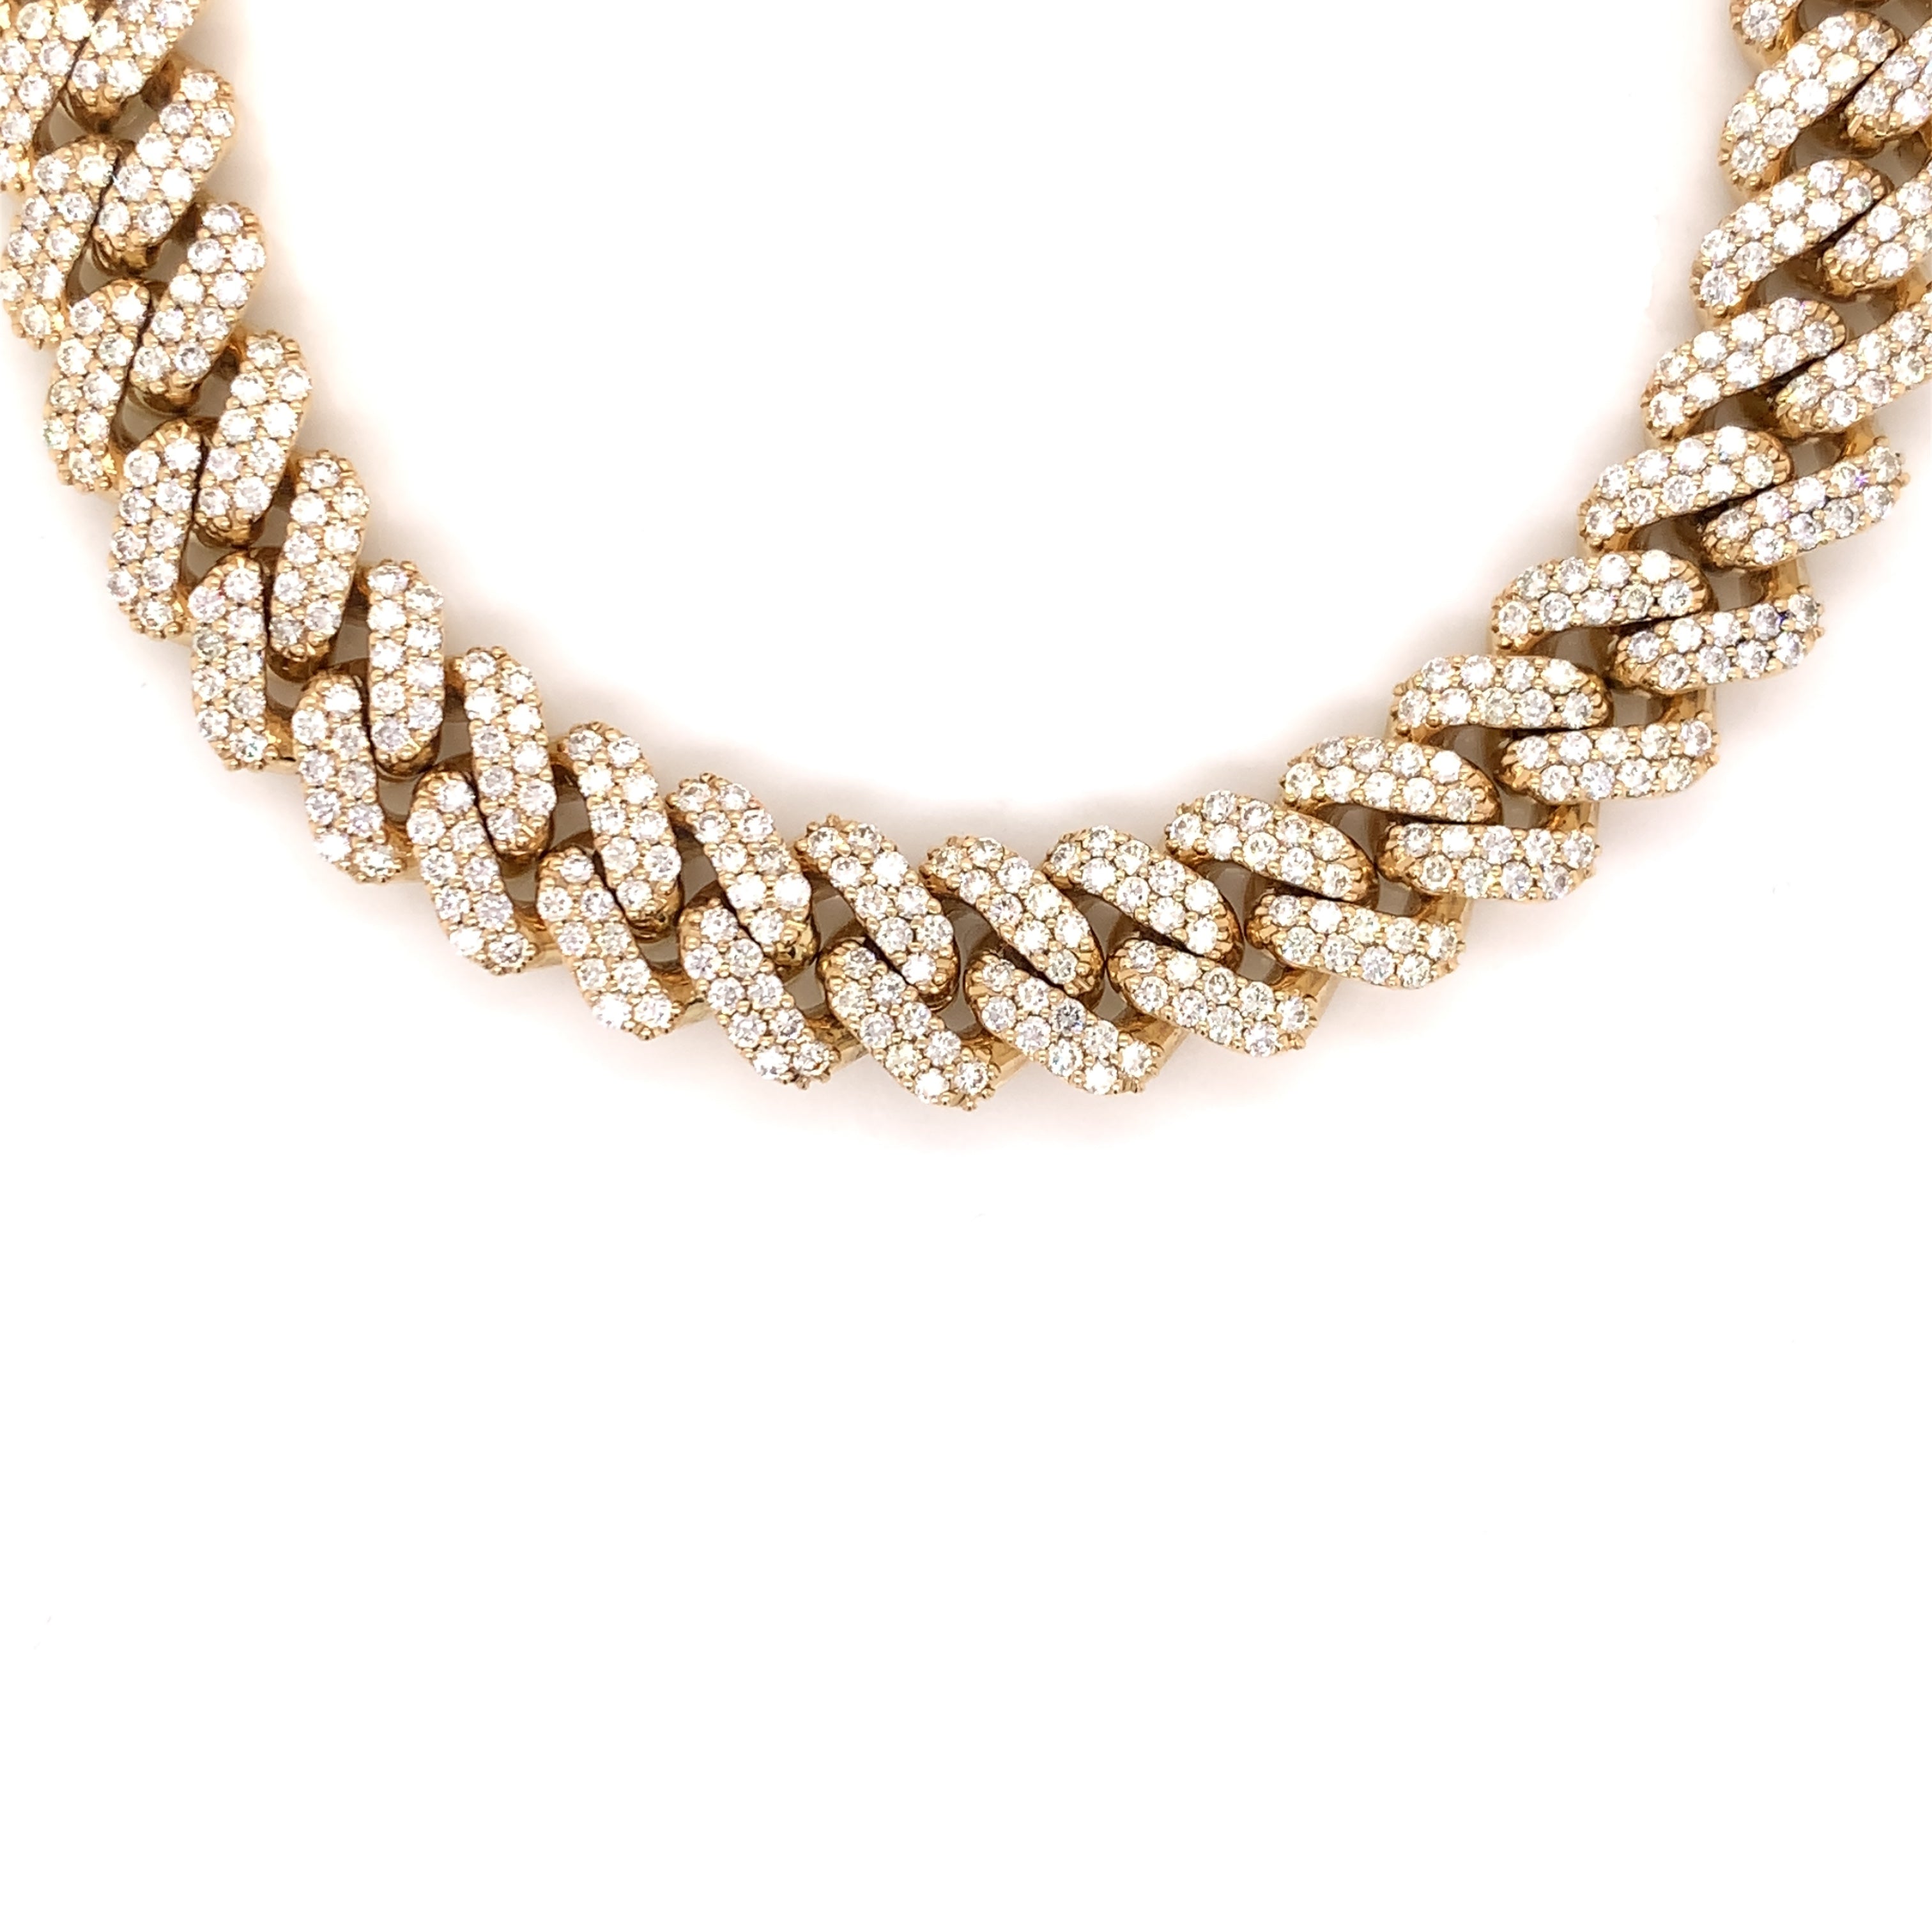 18.00 CT. Diamond Cuban Chain in 10KT Gold - White Carat - USA & Canada